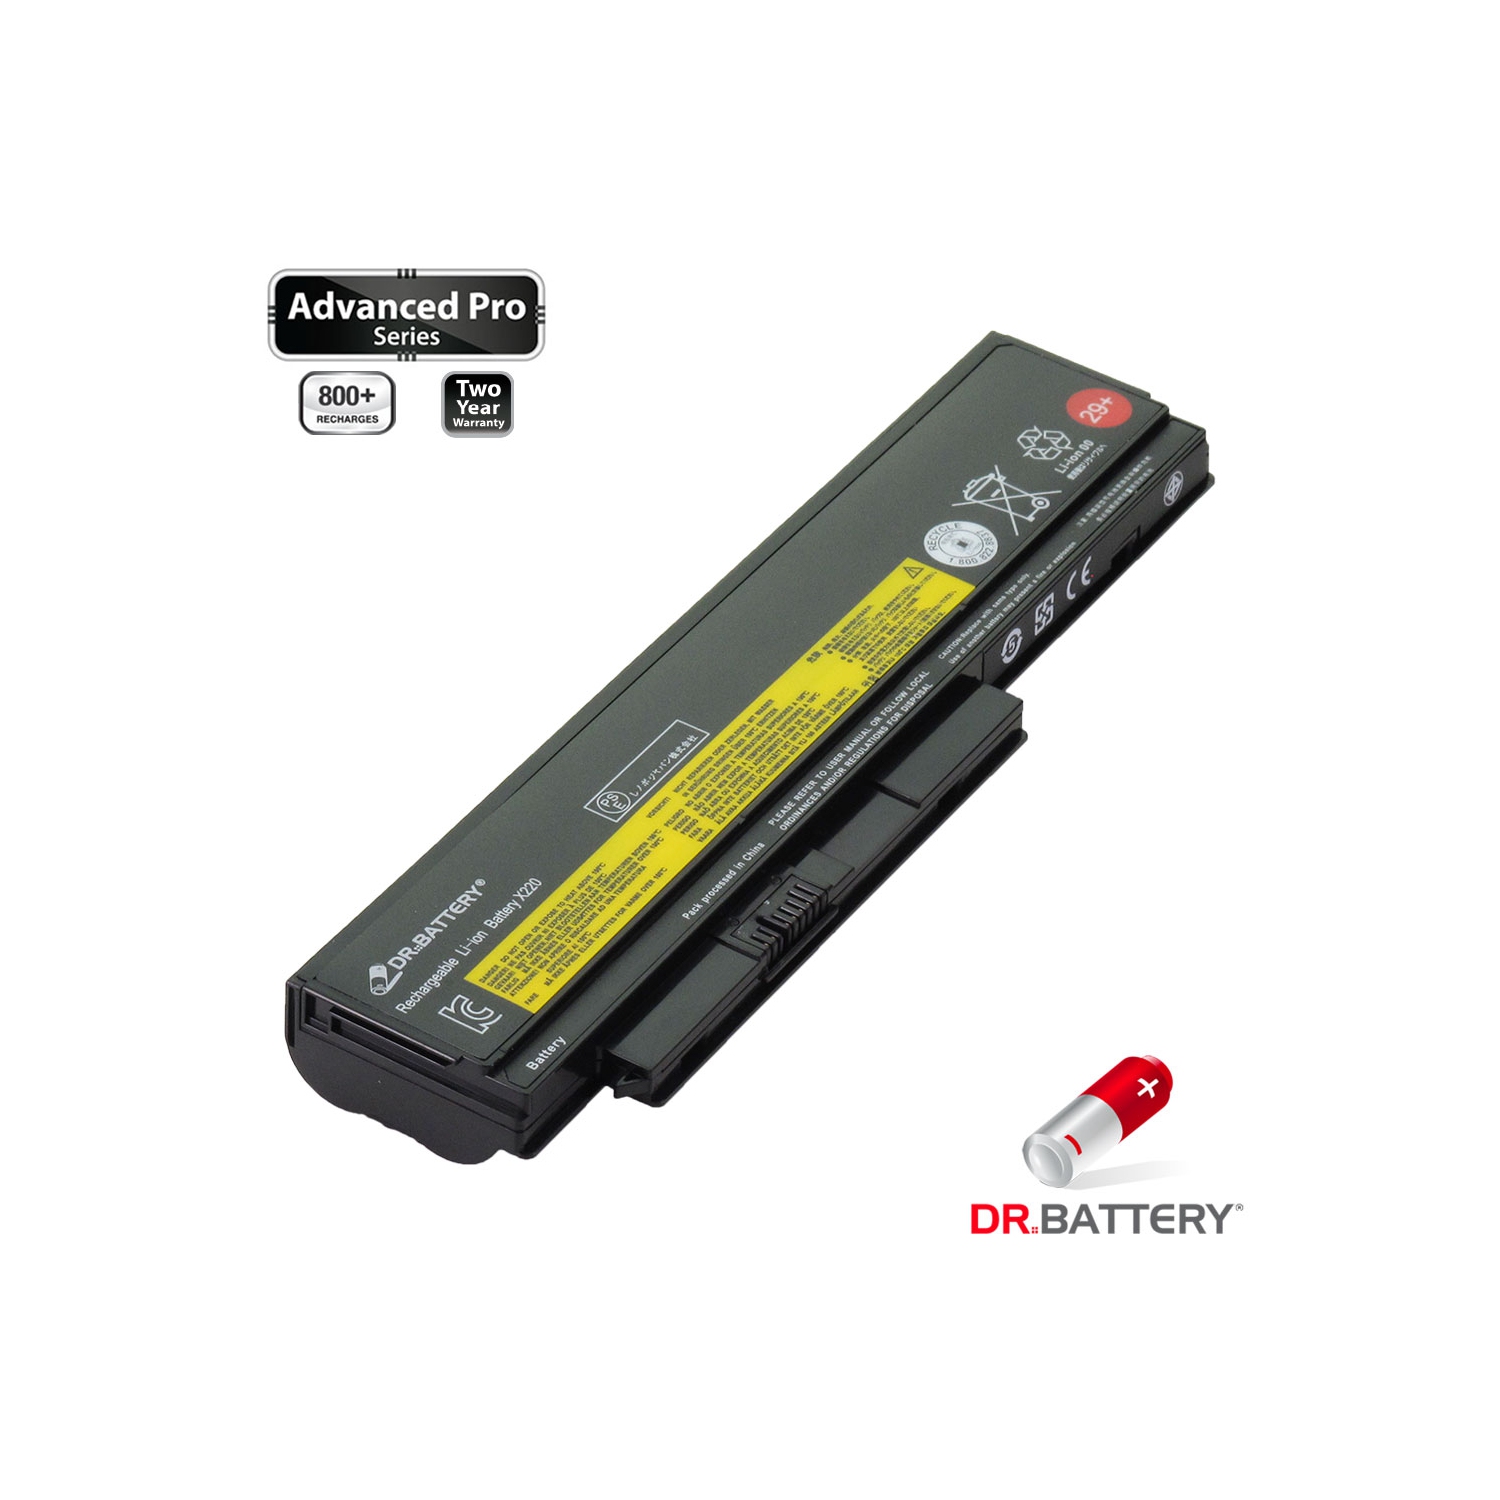 Dr. Battery - Samsung SDI Cells for Lenovo ThinkPad X220 4293 / X220 Series / 0A36305 / 0A36306 / 0A36307 - Free Shipping